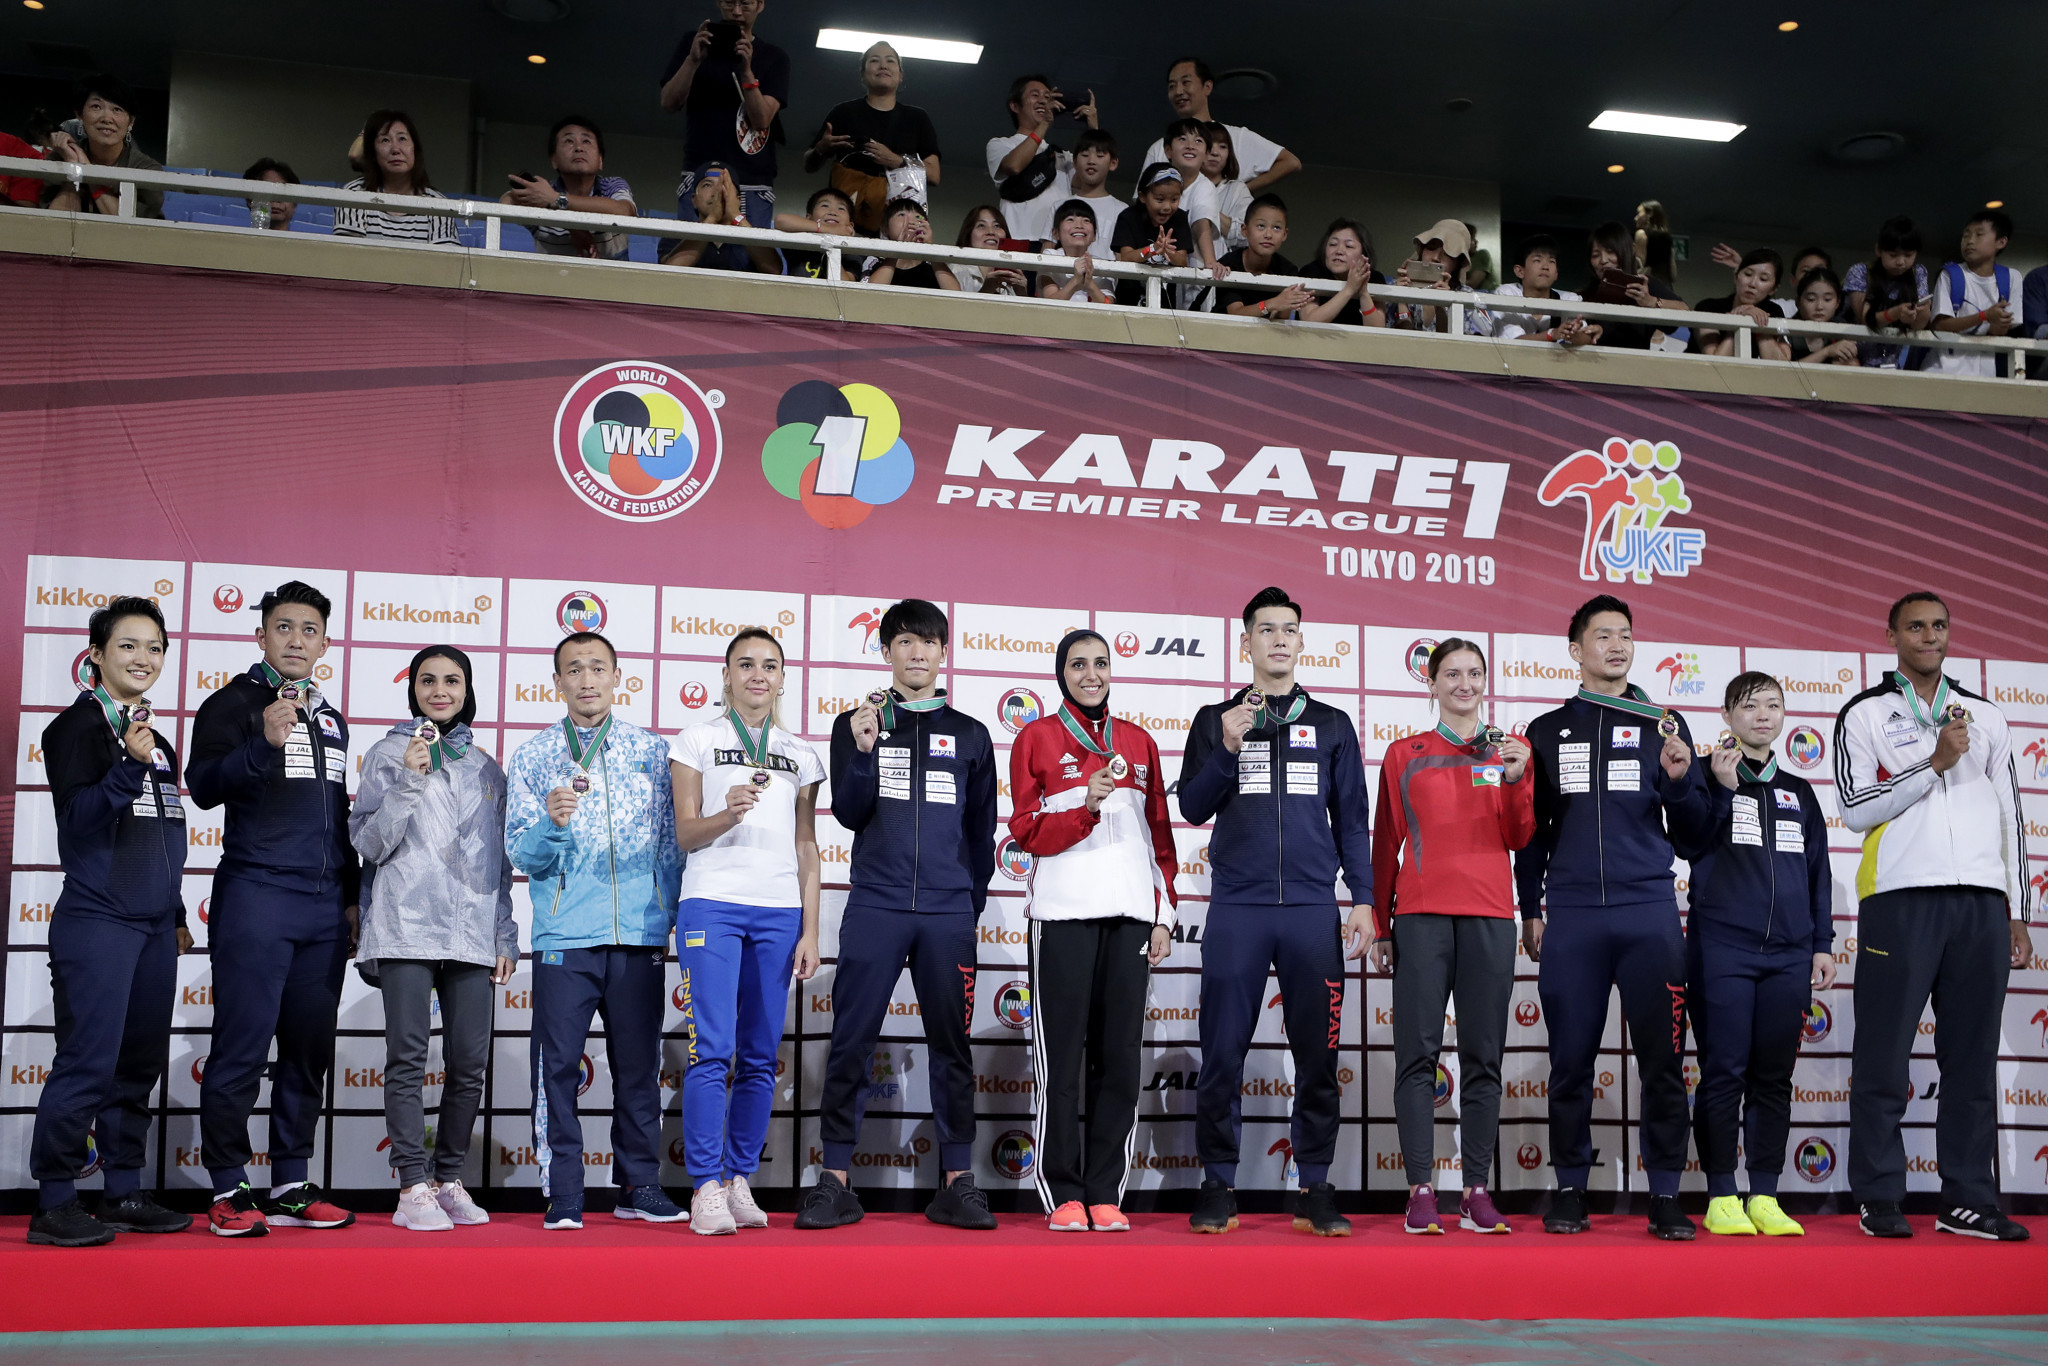 Dubai set to stage 2022 Karate 1-Premier League opener